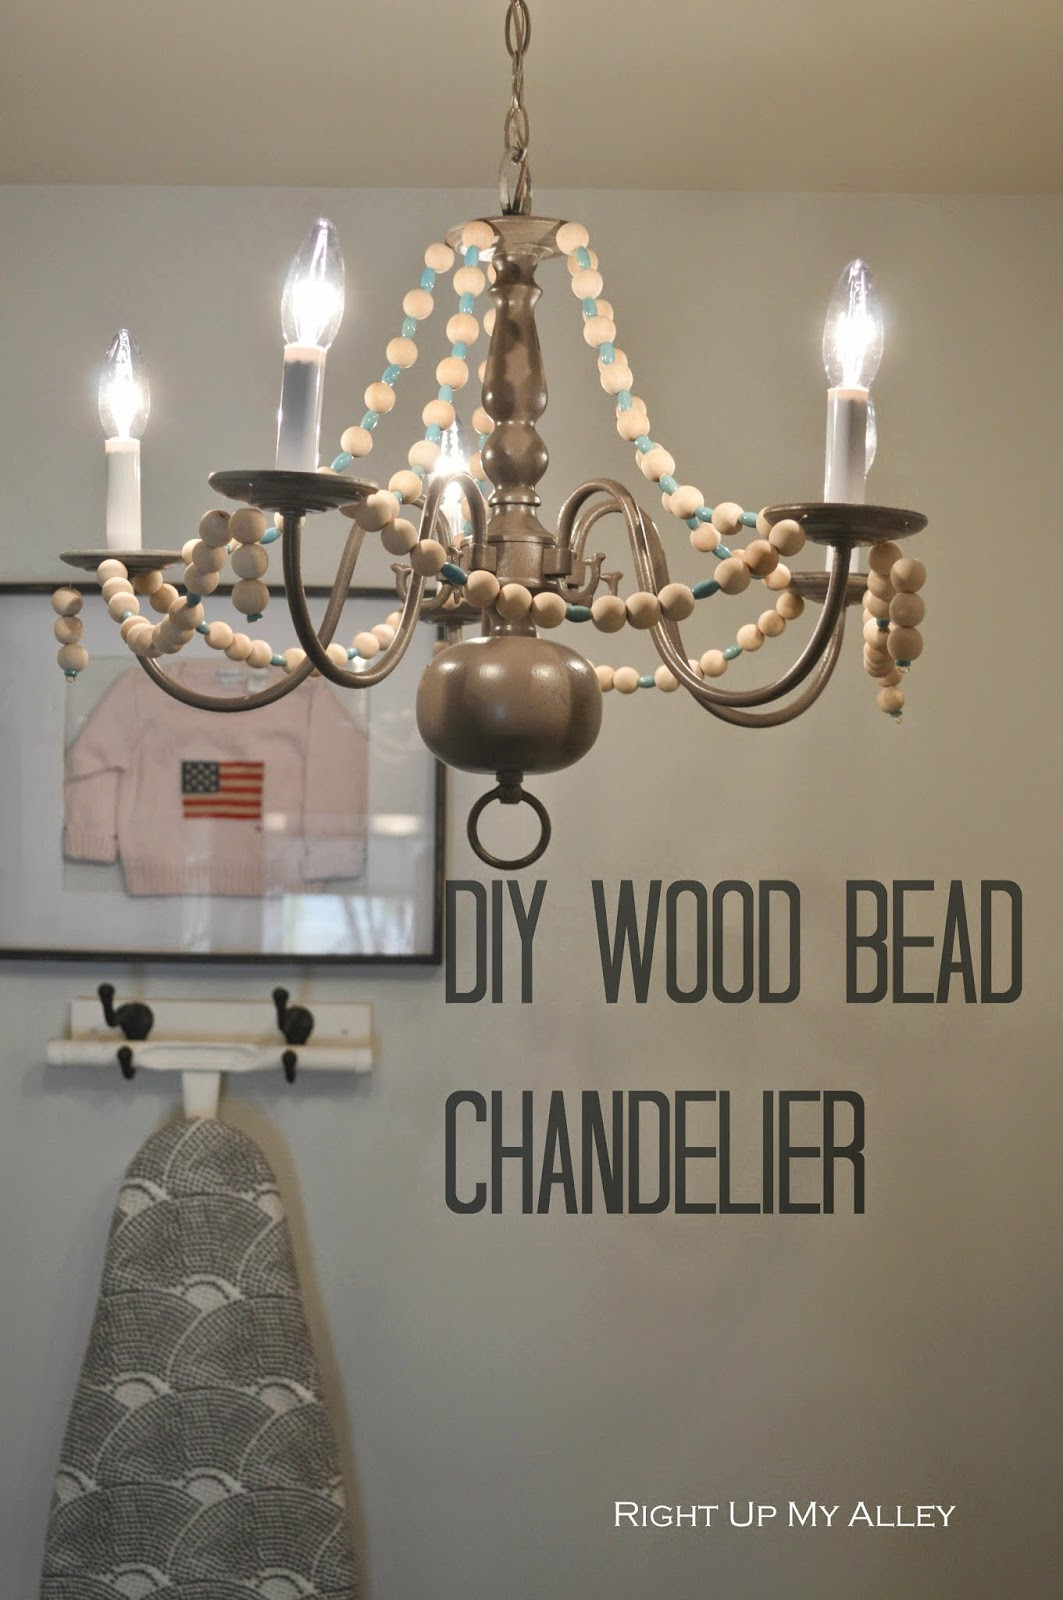 DIY Wood Bead Chandelier
 Right up my alley DIY Wood Bead Chandelier